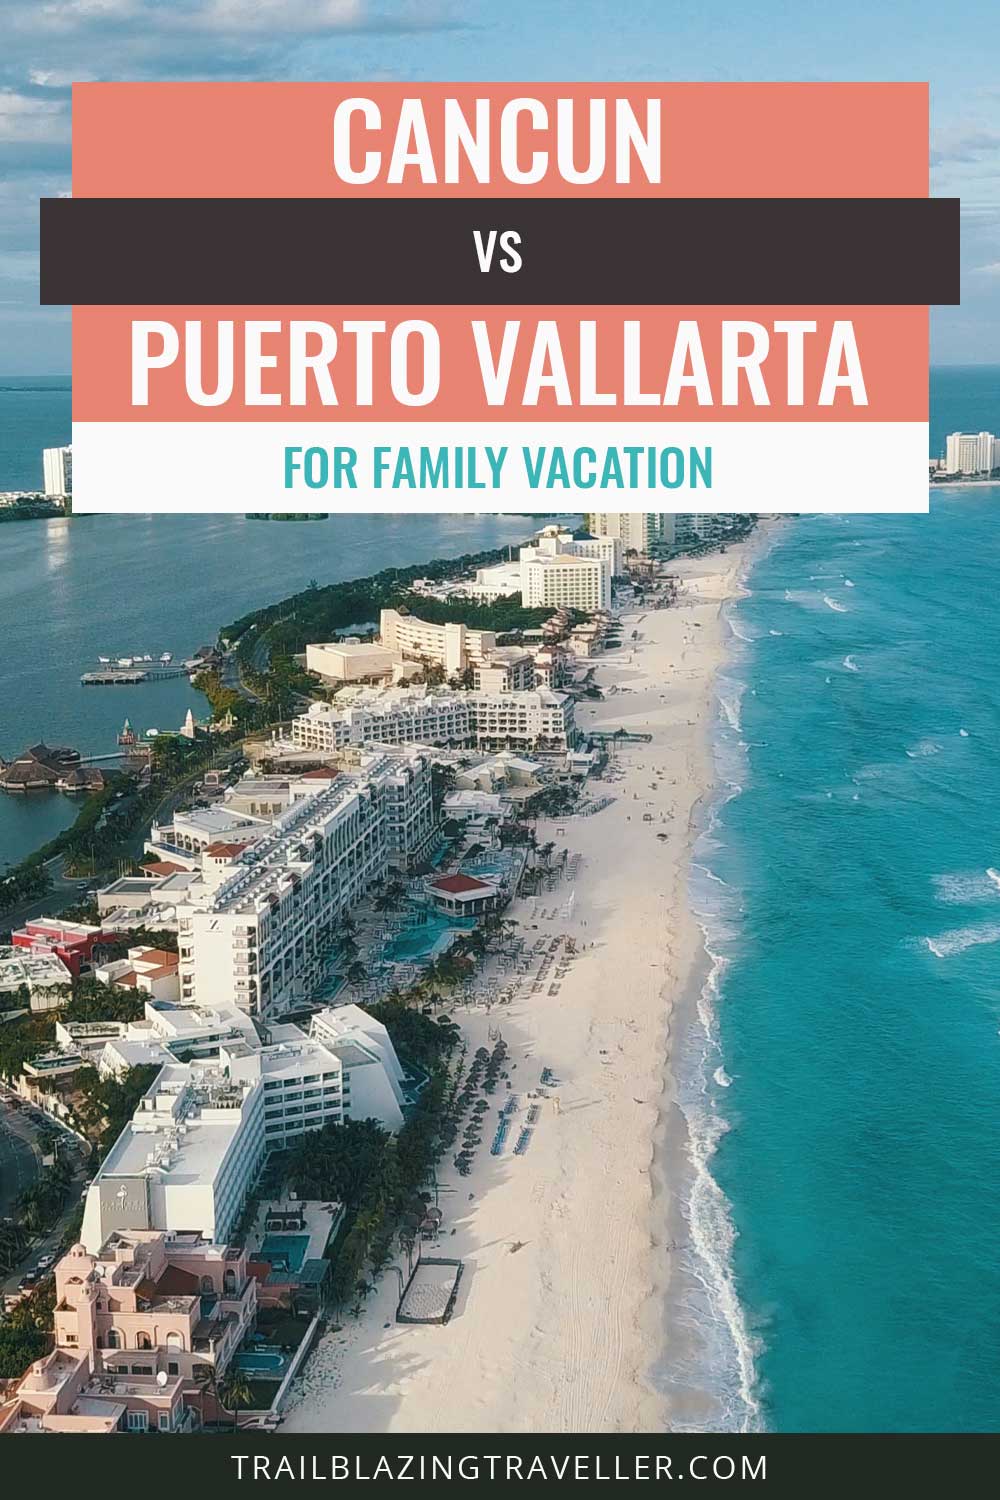 Cancun vs. Puerto Vallarta For Family Vacation